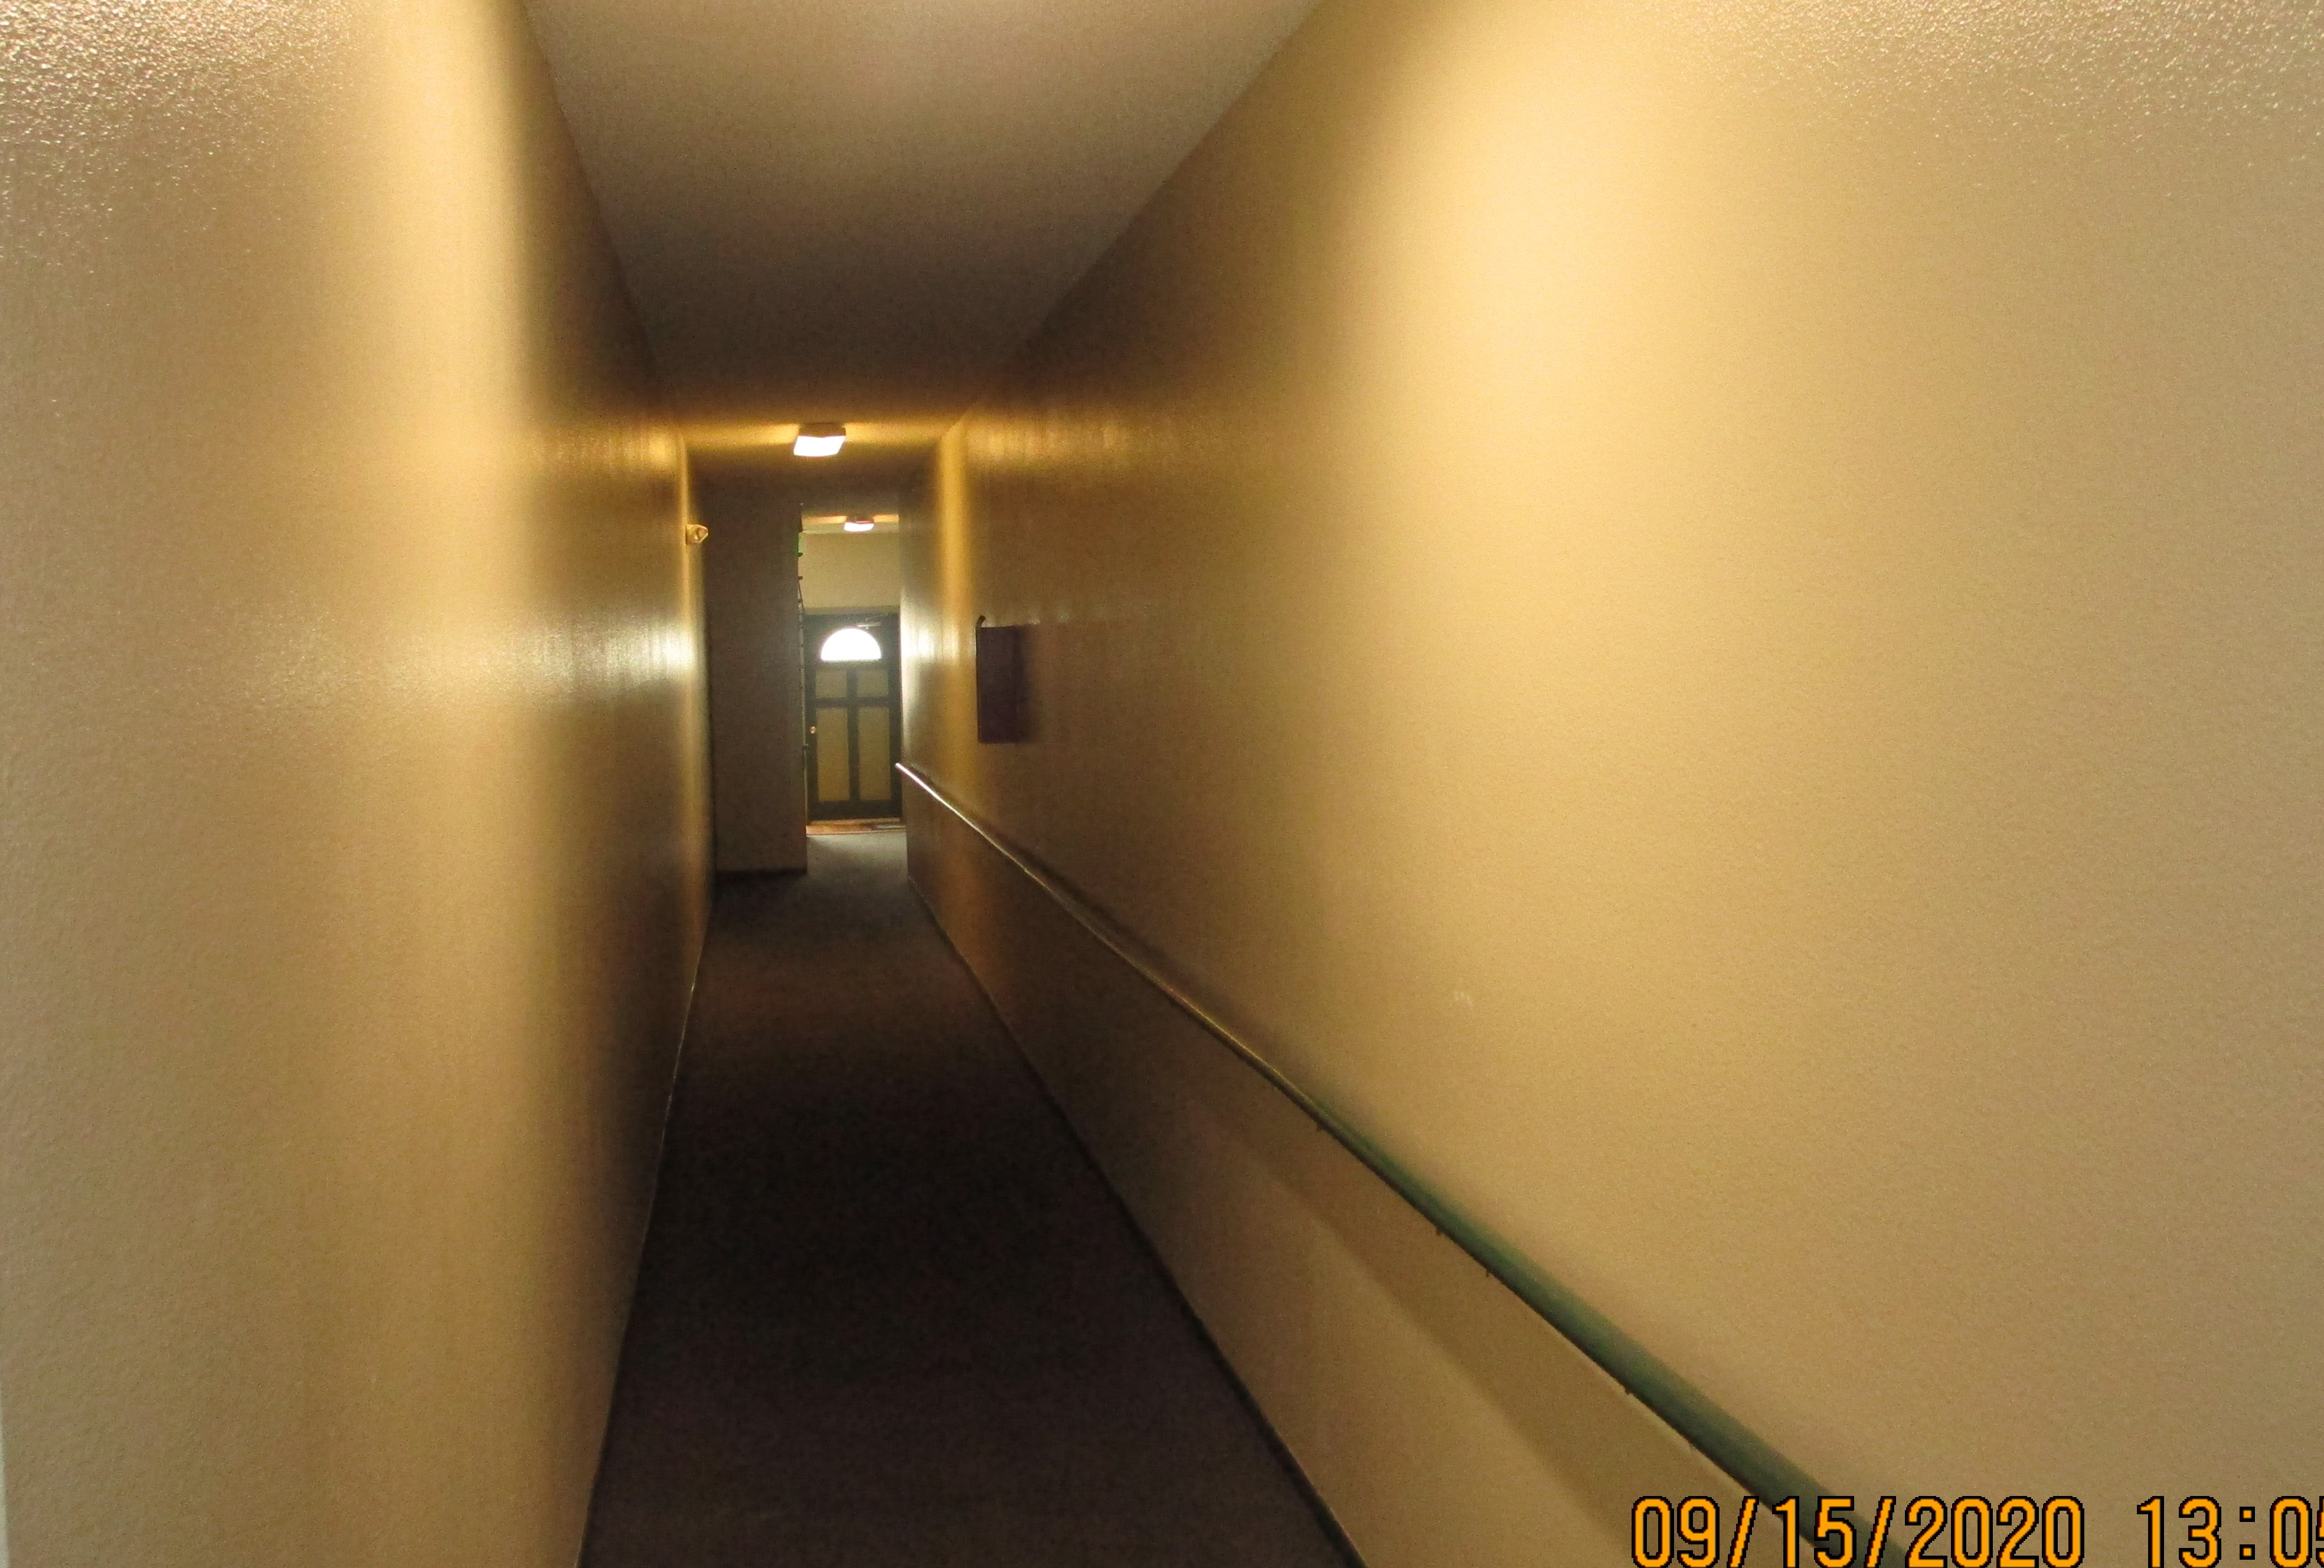 Image of an interior hallway.